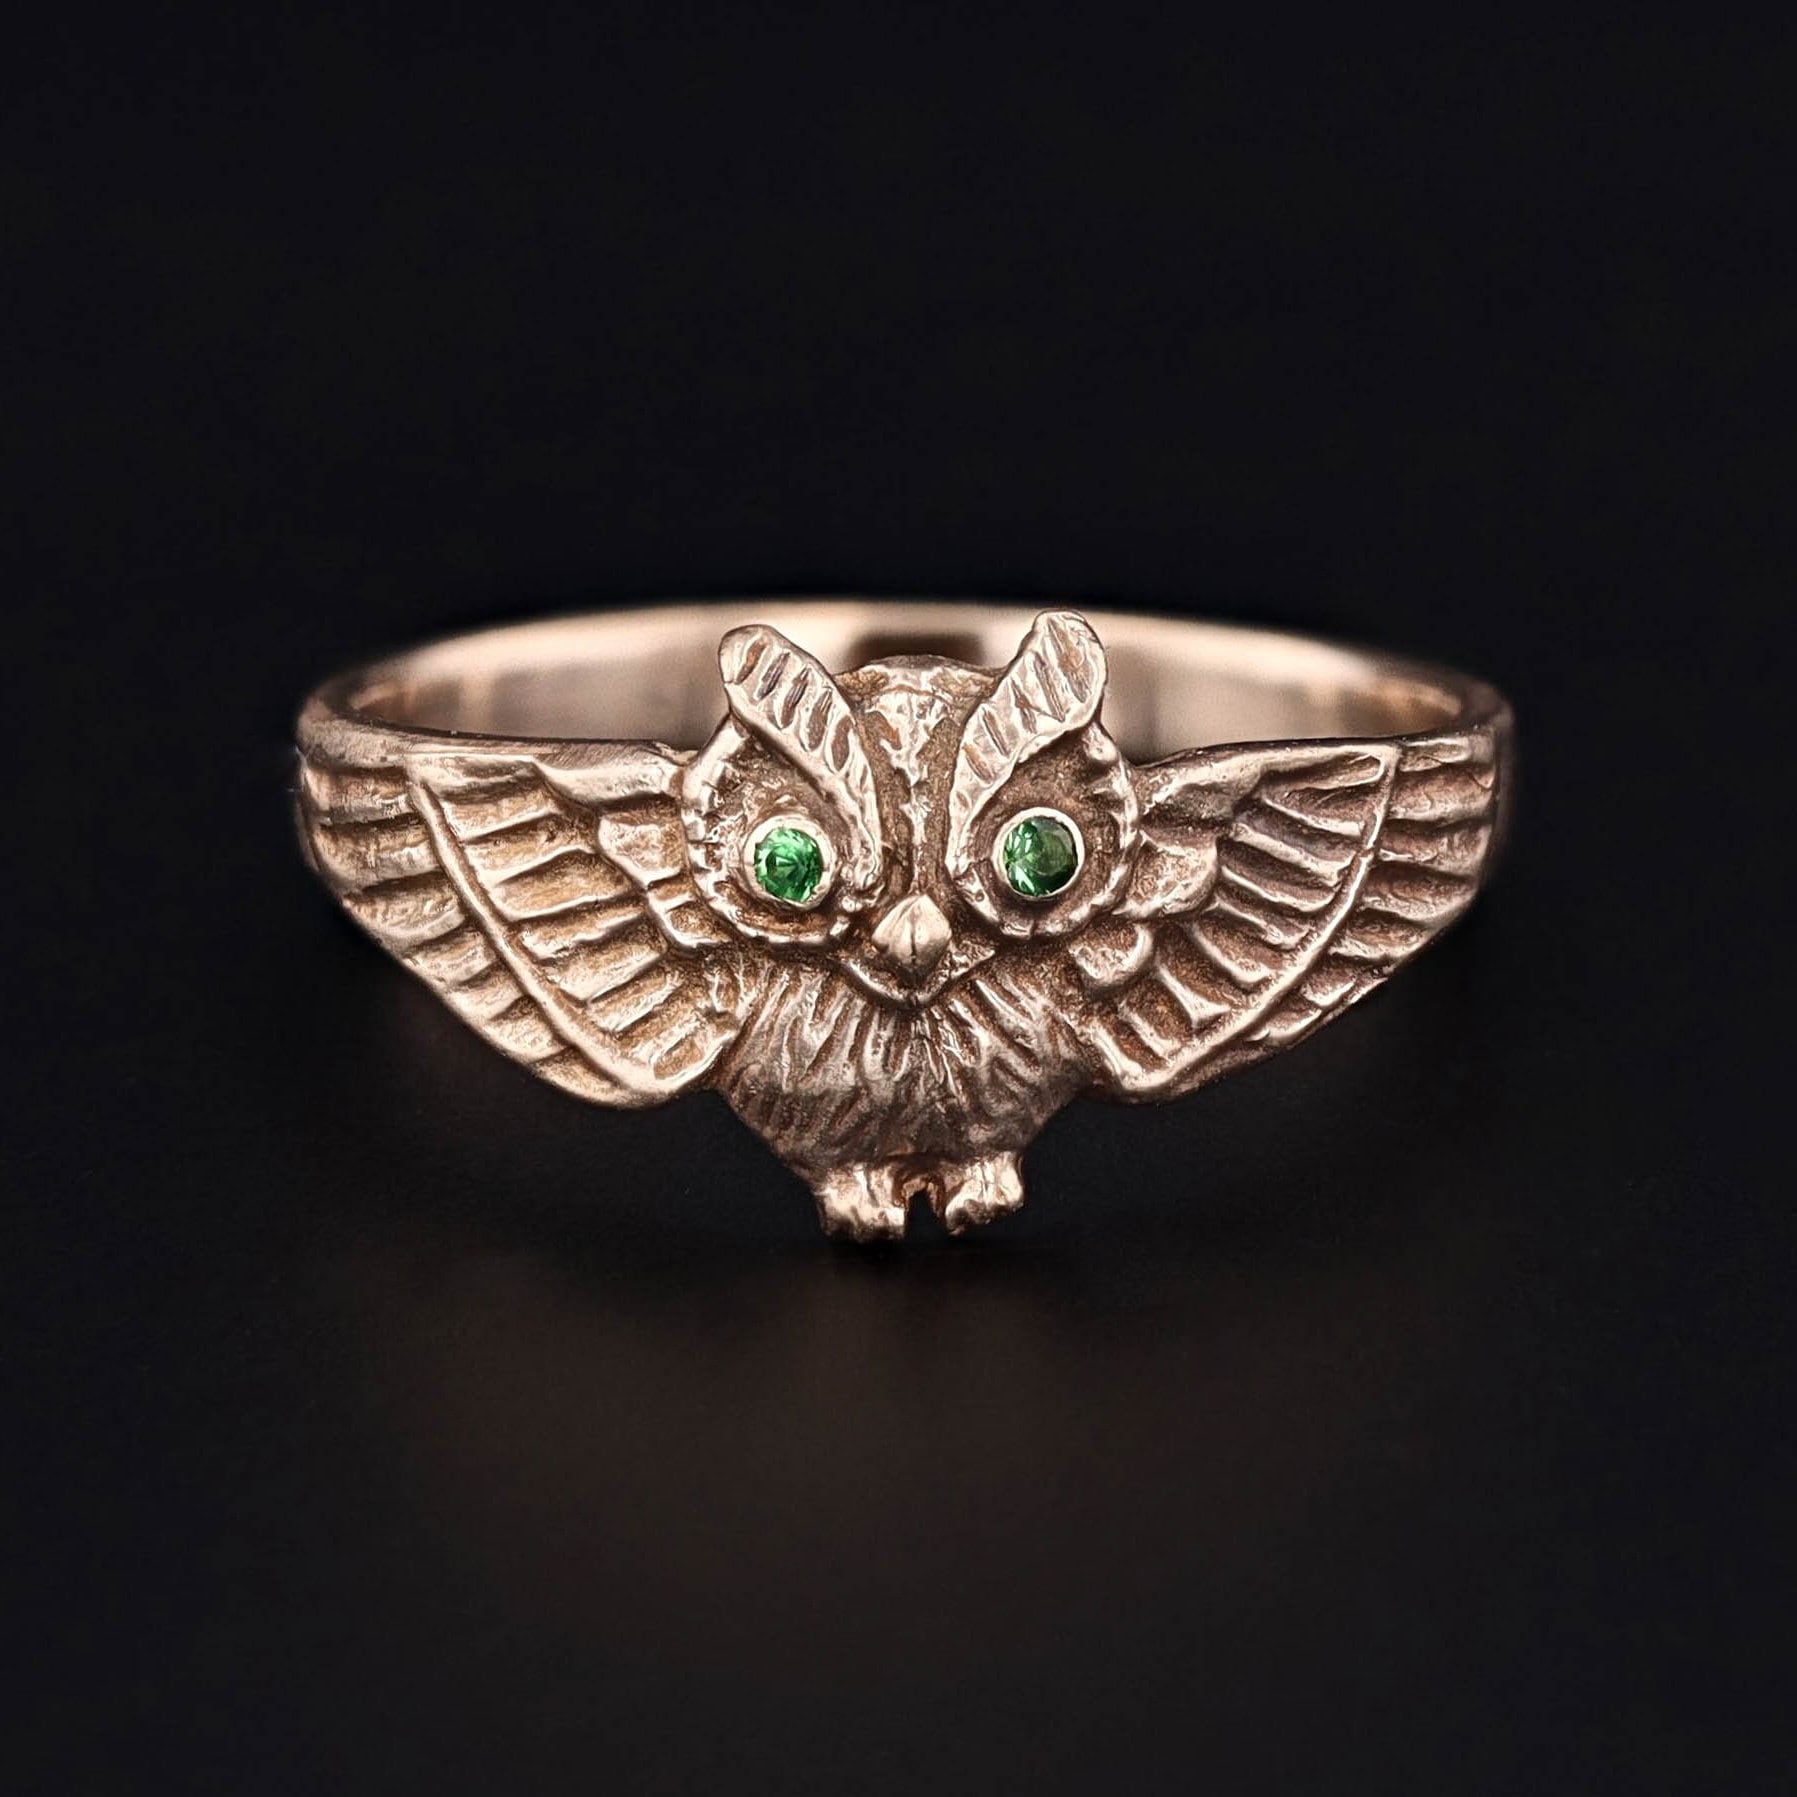 Owl Ring 14k Gold with Tsavorite Garnet Eyes Recast from an Antique Ring